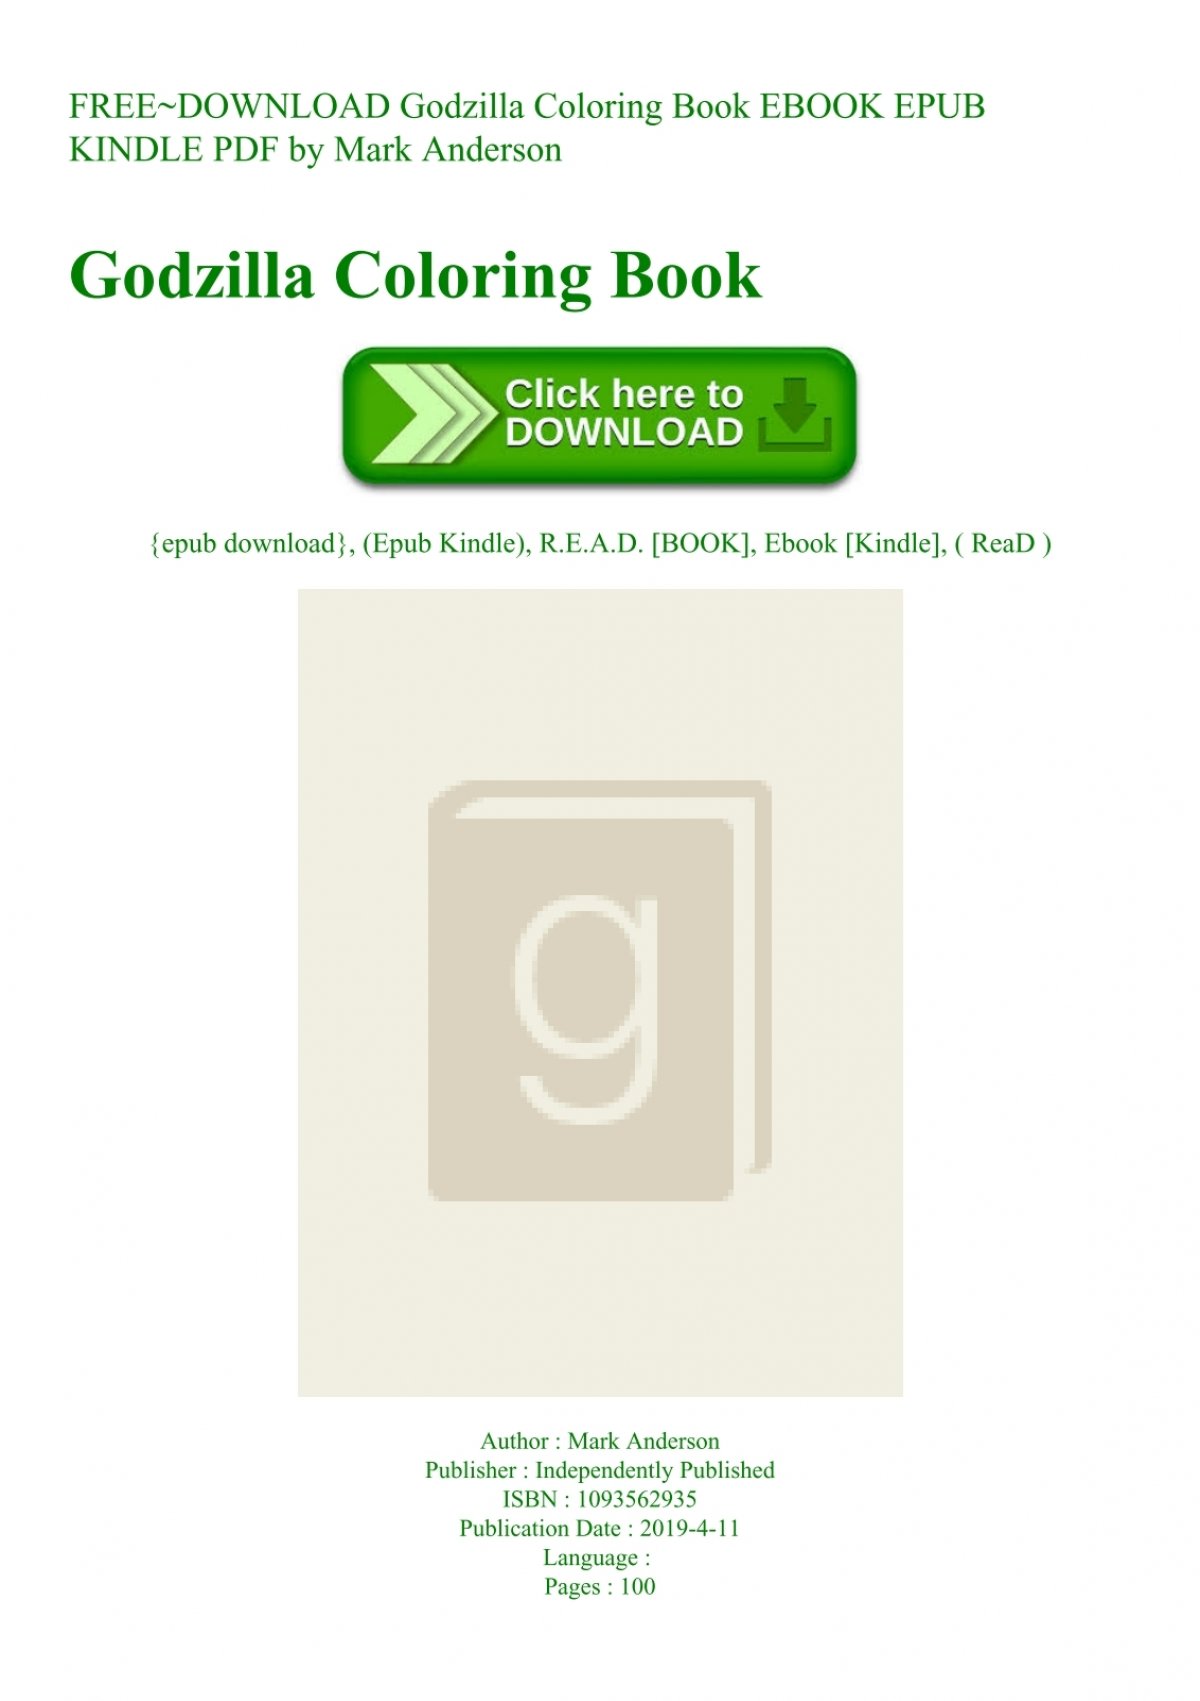 Download Free Download Godzilla Coloring Book Ebook Epub Kindle Pdf By Mark Anderson